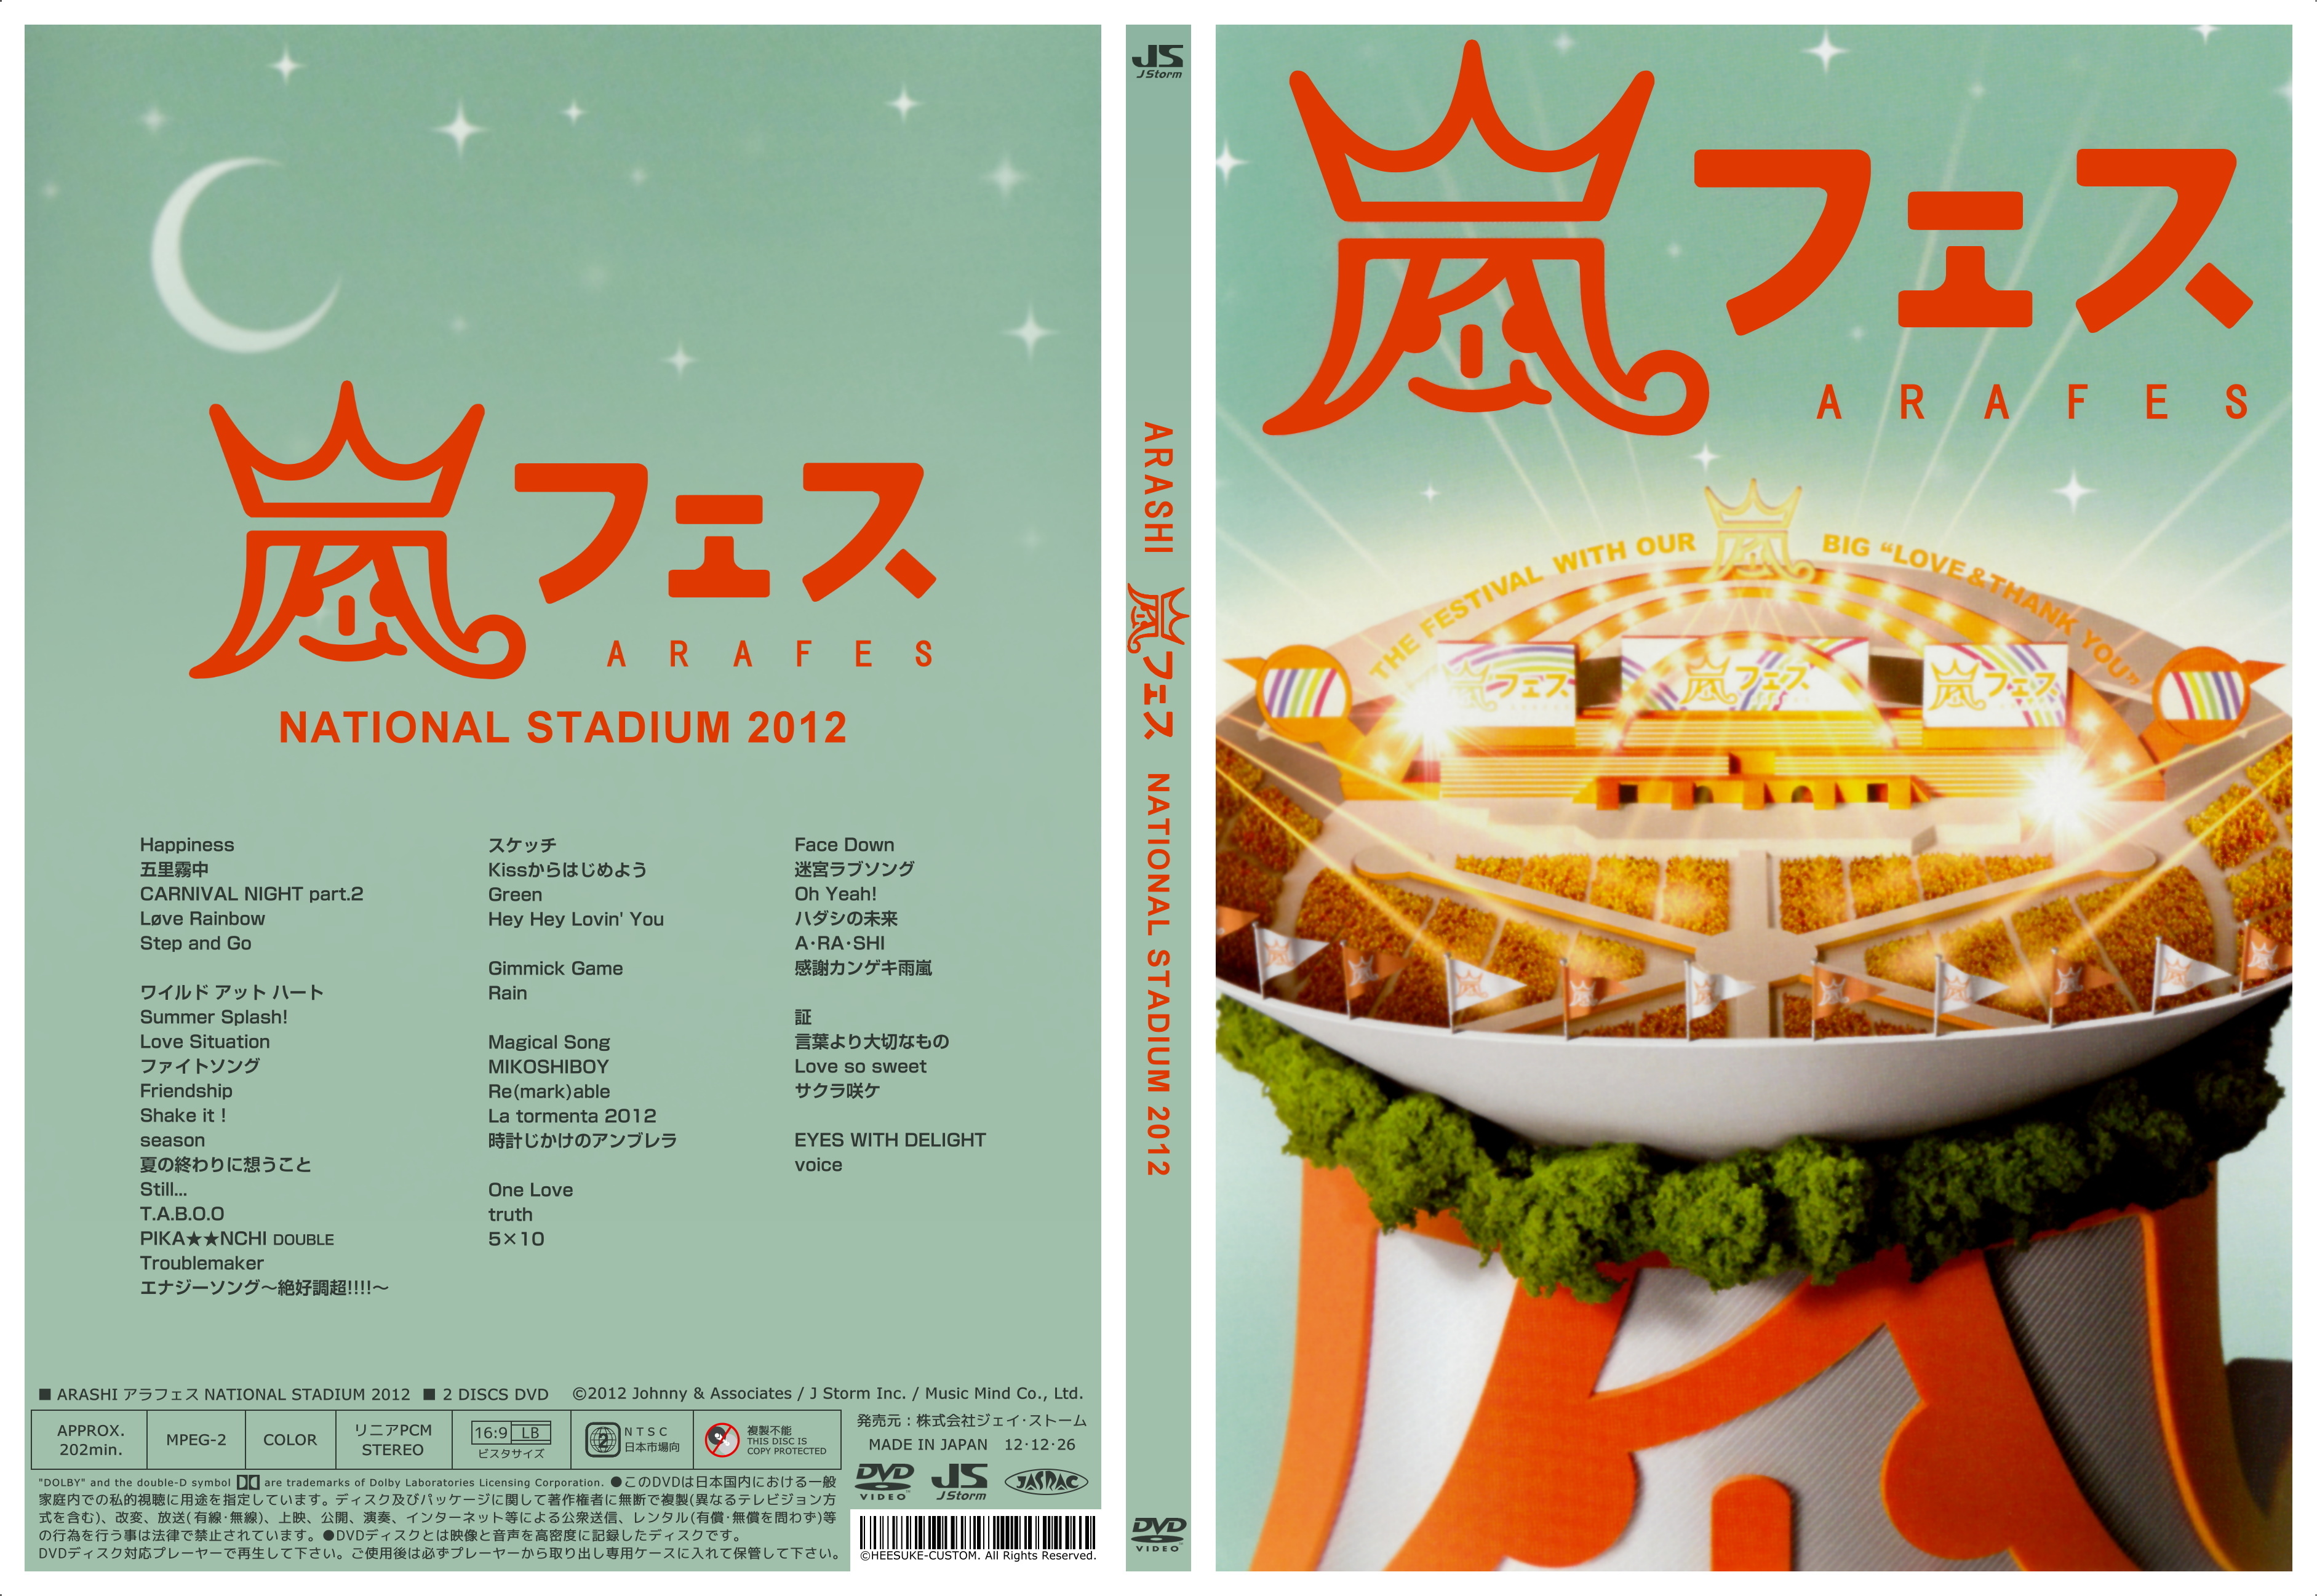 ARASHI 嵐フェス NATIONAL STADIUM 2012 DVD HEESUKEのあれこれ倉庫 ジャケット本店